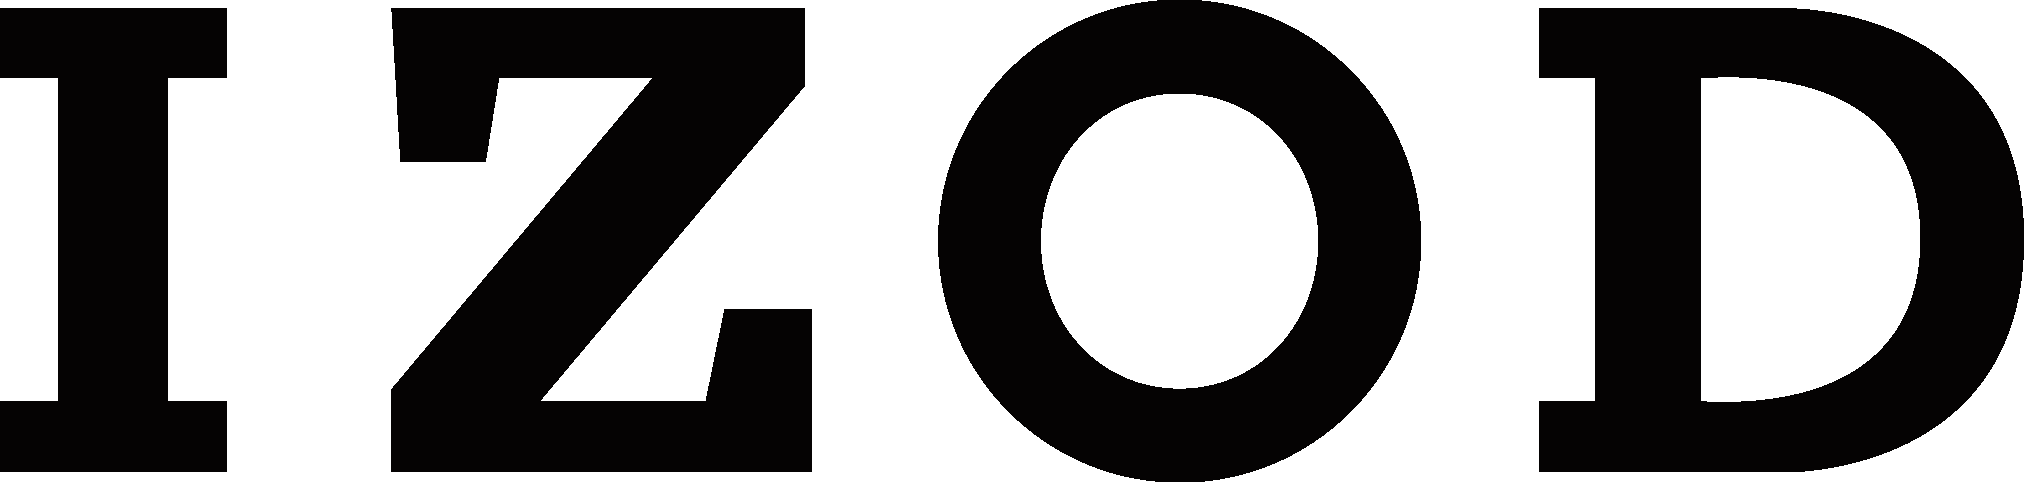 IZOD Logo Download Vector